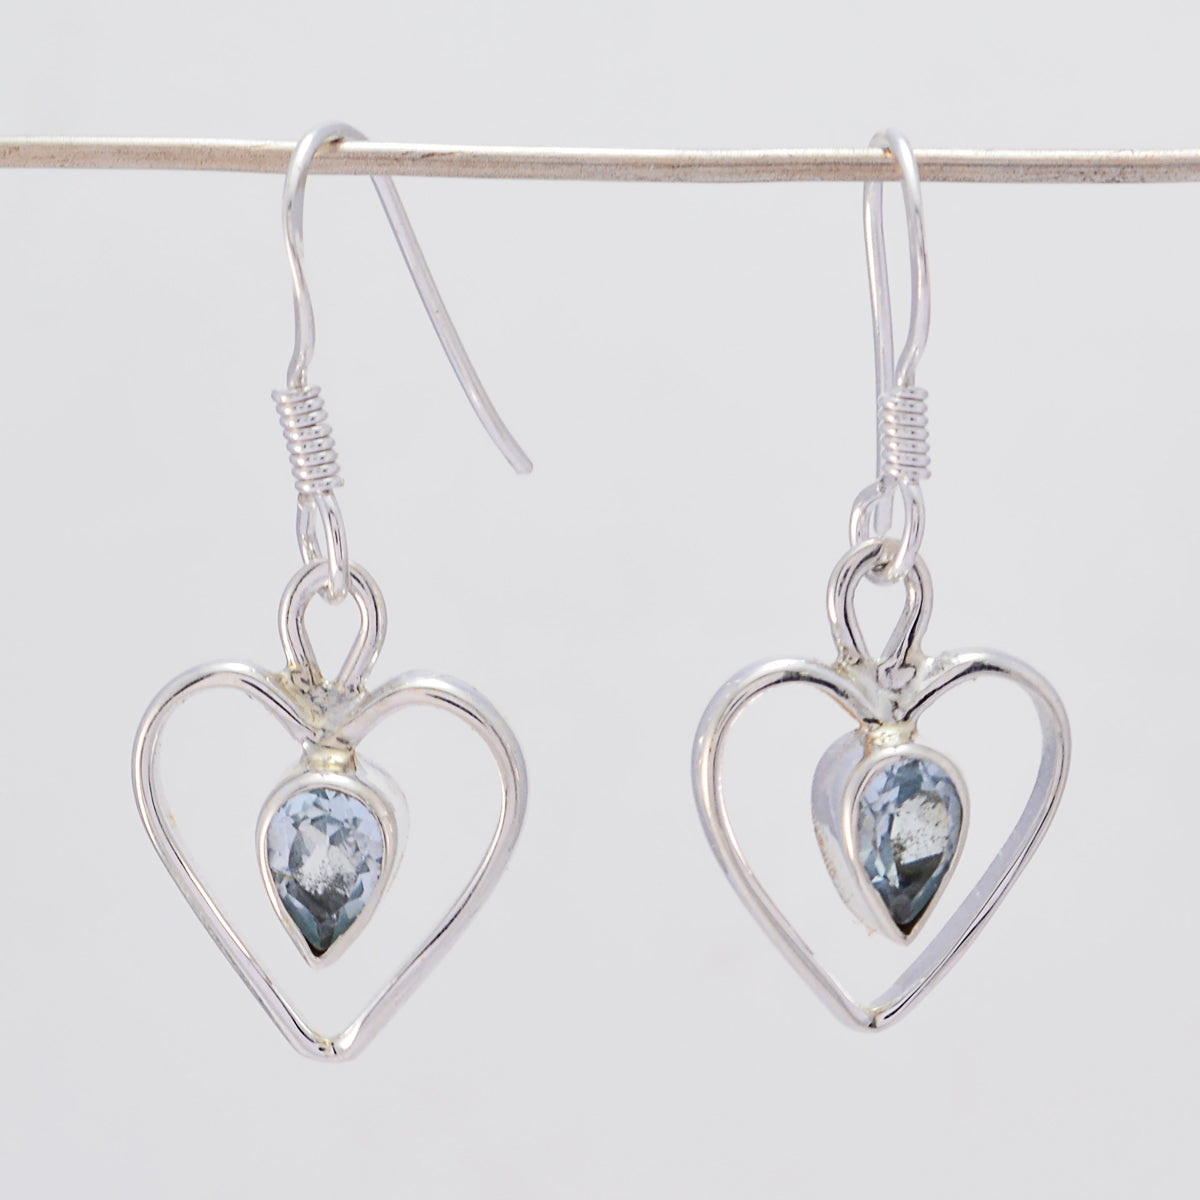 Riyo Good Gemstones pear Faceted Blue Topaz Silver Earring gift for graduation